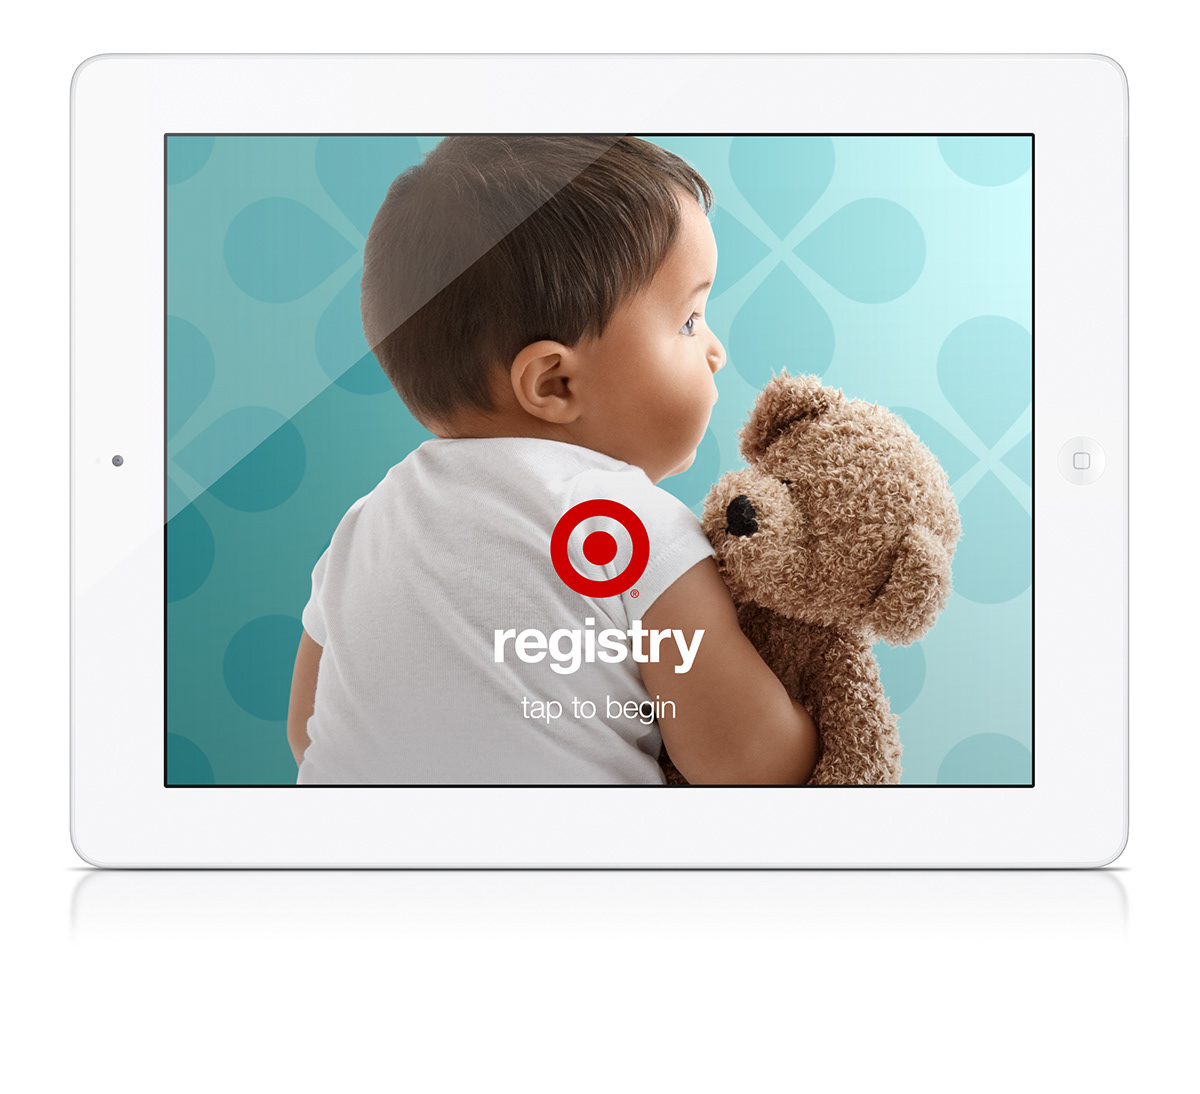 target registry baby wedding ios app iPad ipod